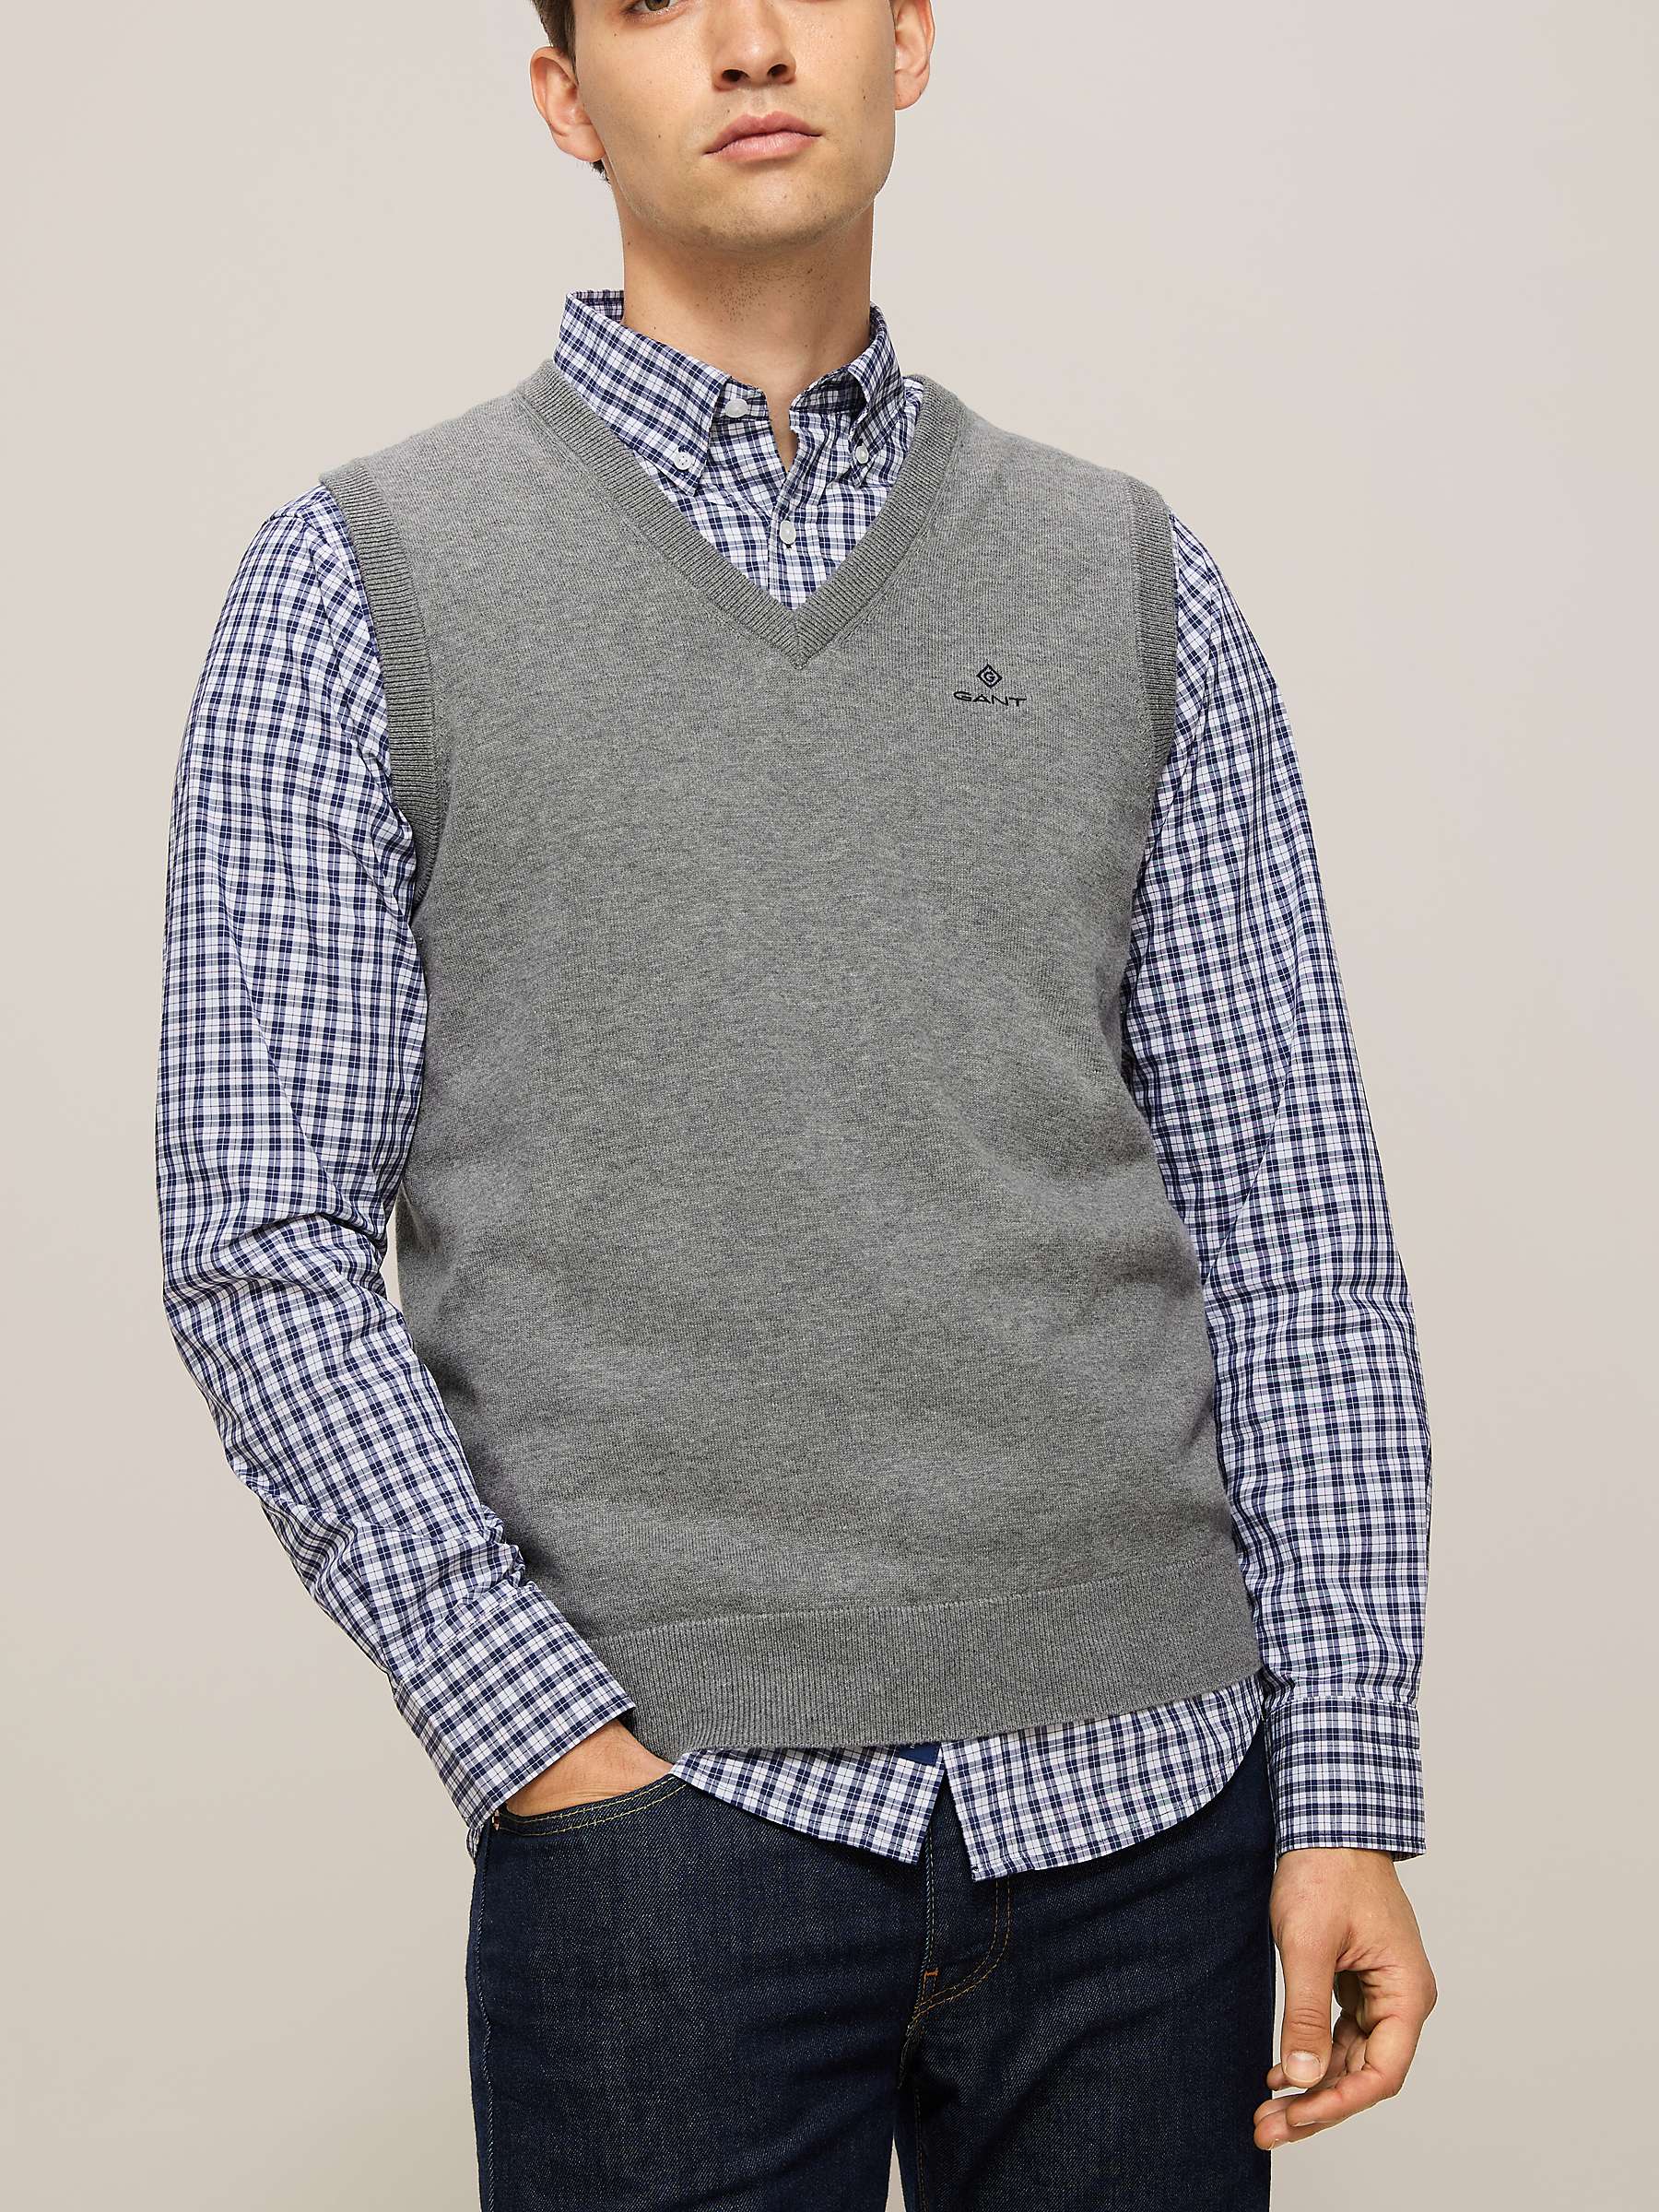 GANT Classic Cotton Slipover Sweater Vest at John Lewis & Partners